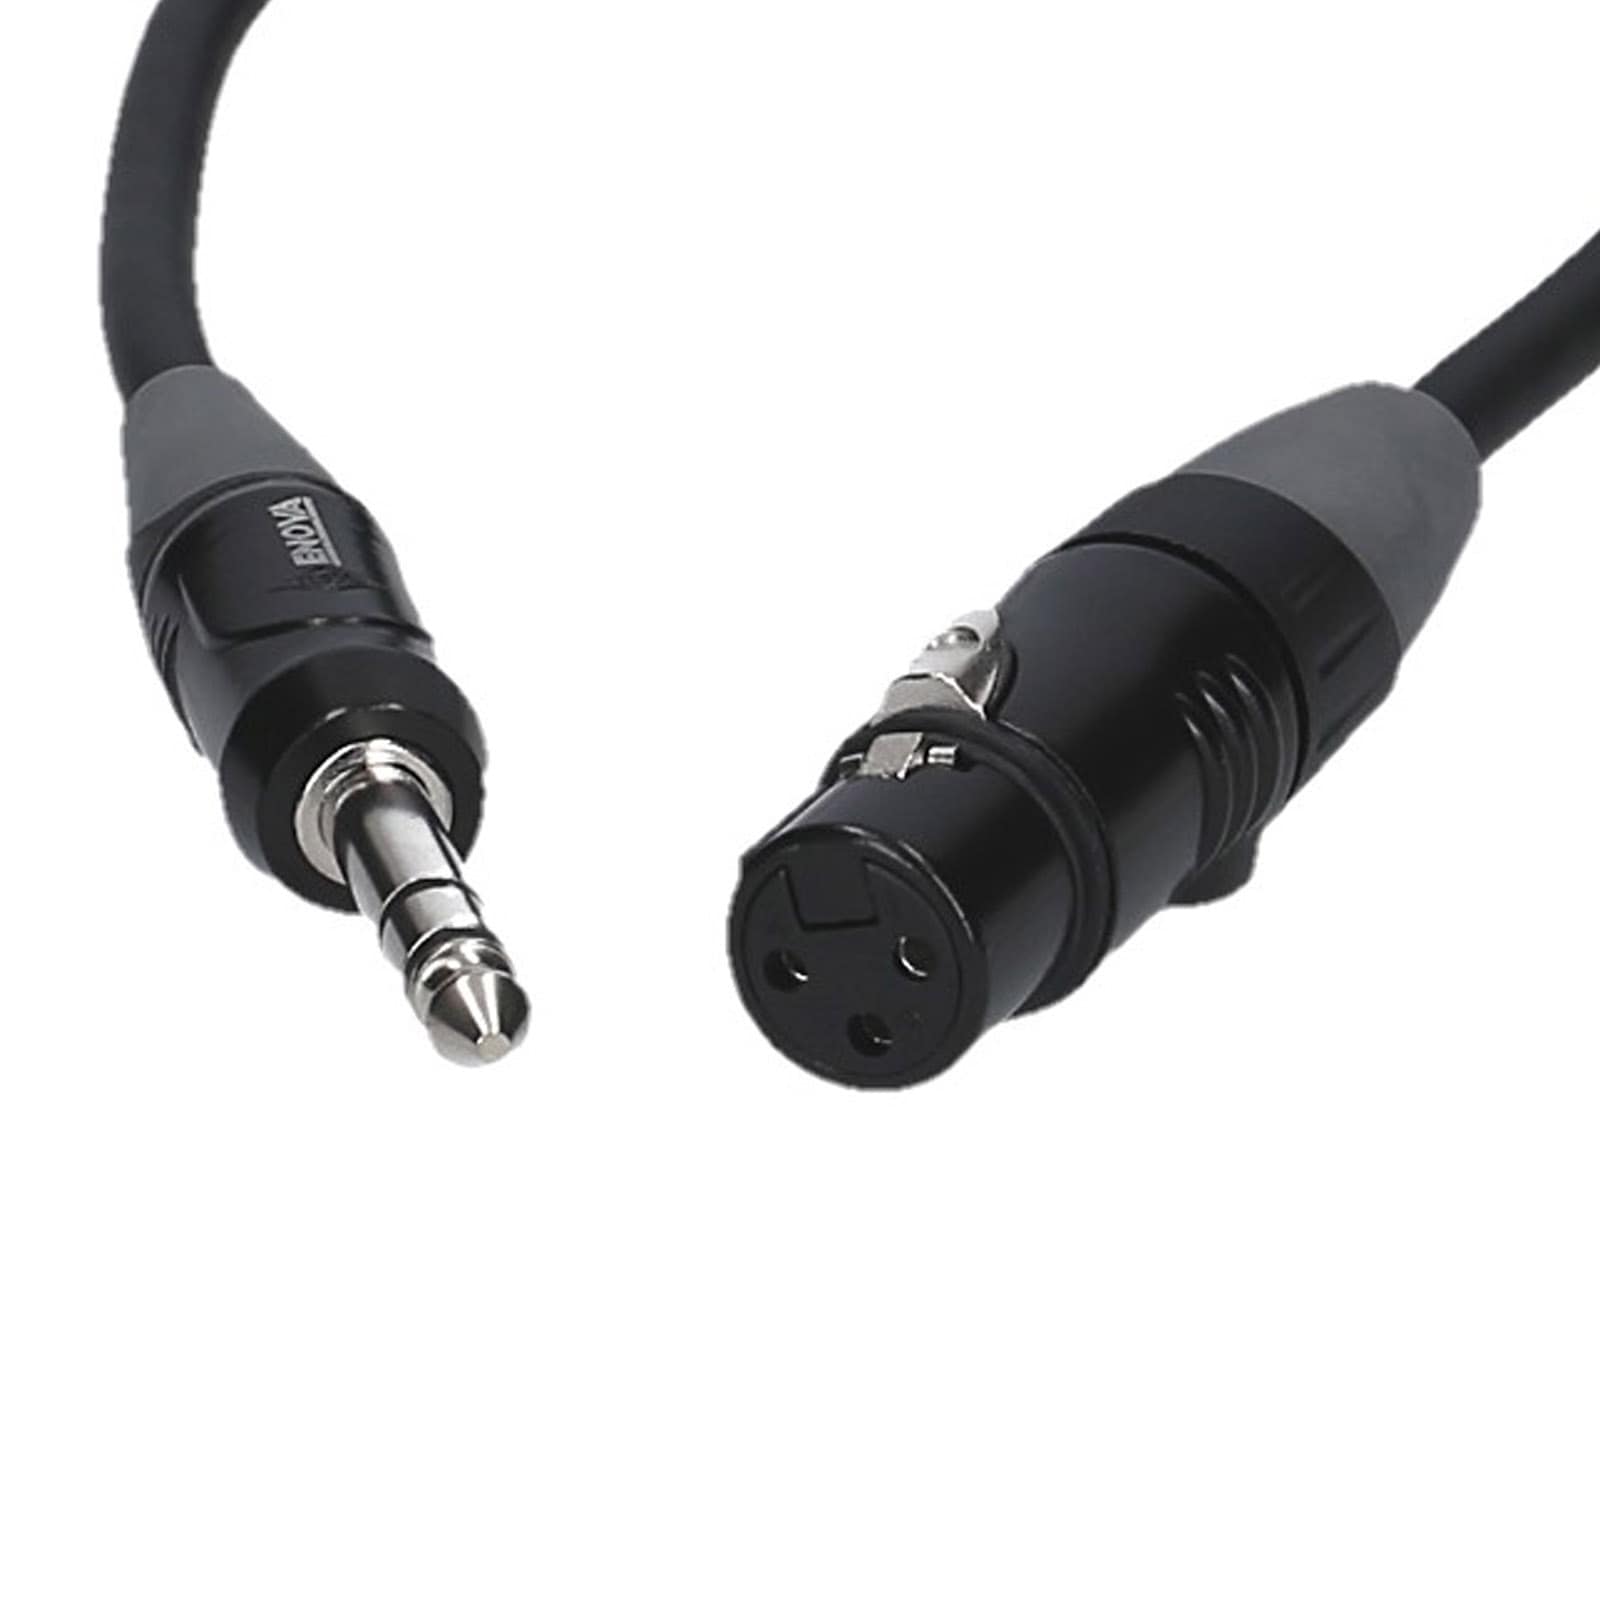 ENOVA XLR Microphone Cable XLFM-Series XLR f to XLR m 3 pin 2 meters